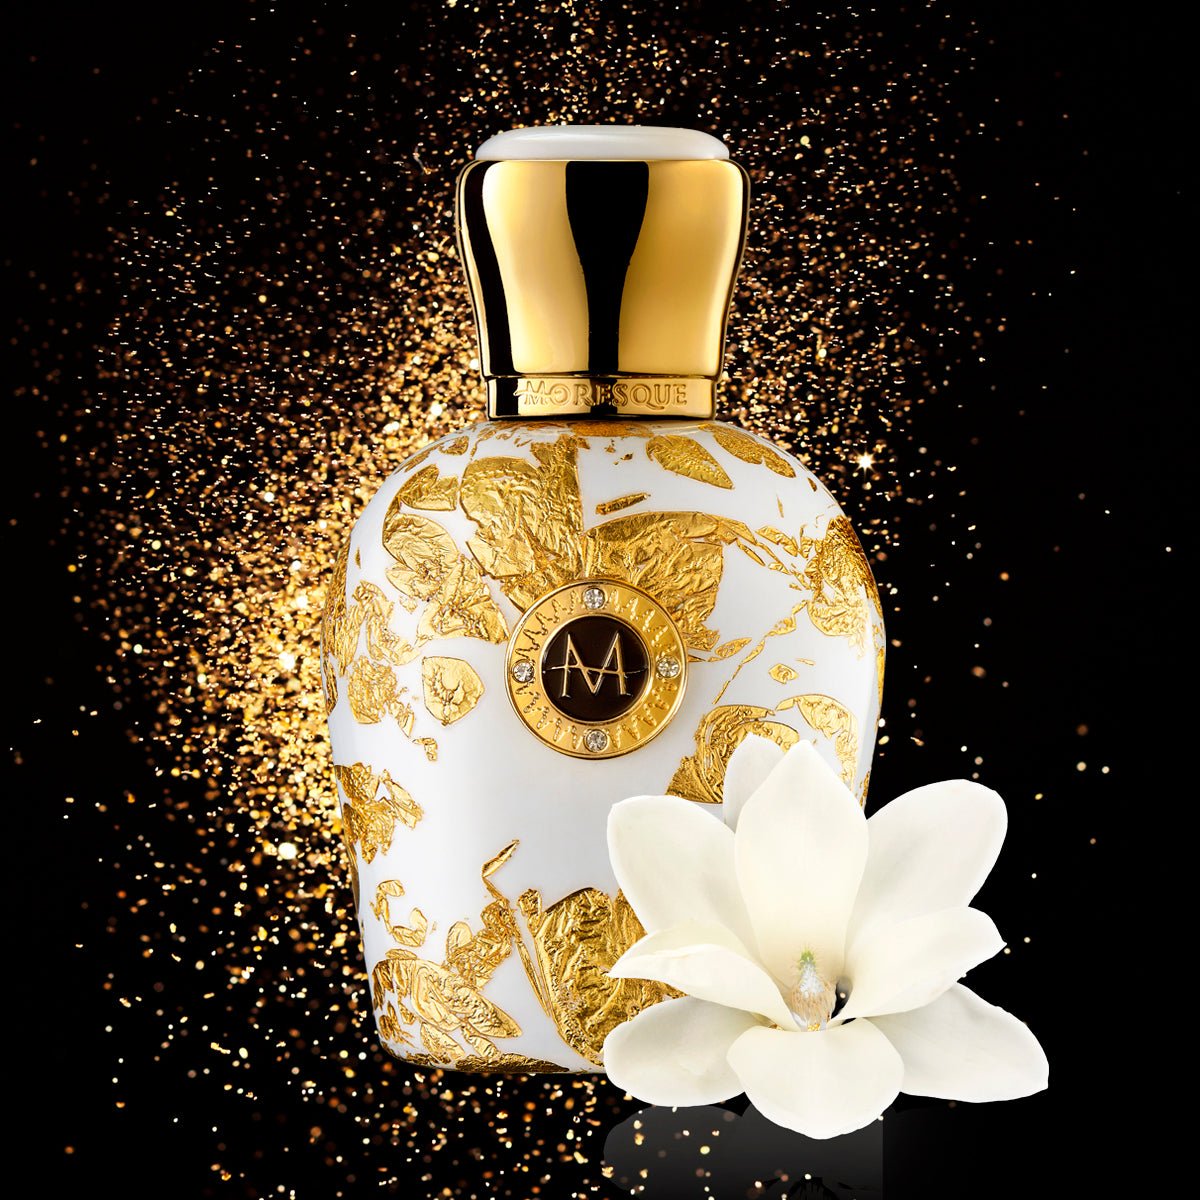 Moresque Parfums Regina Perfume & Cologne 1.7 oz/50 ml ScentRabbit